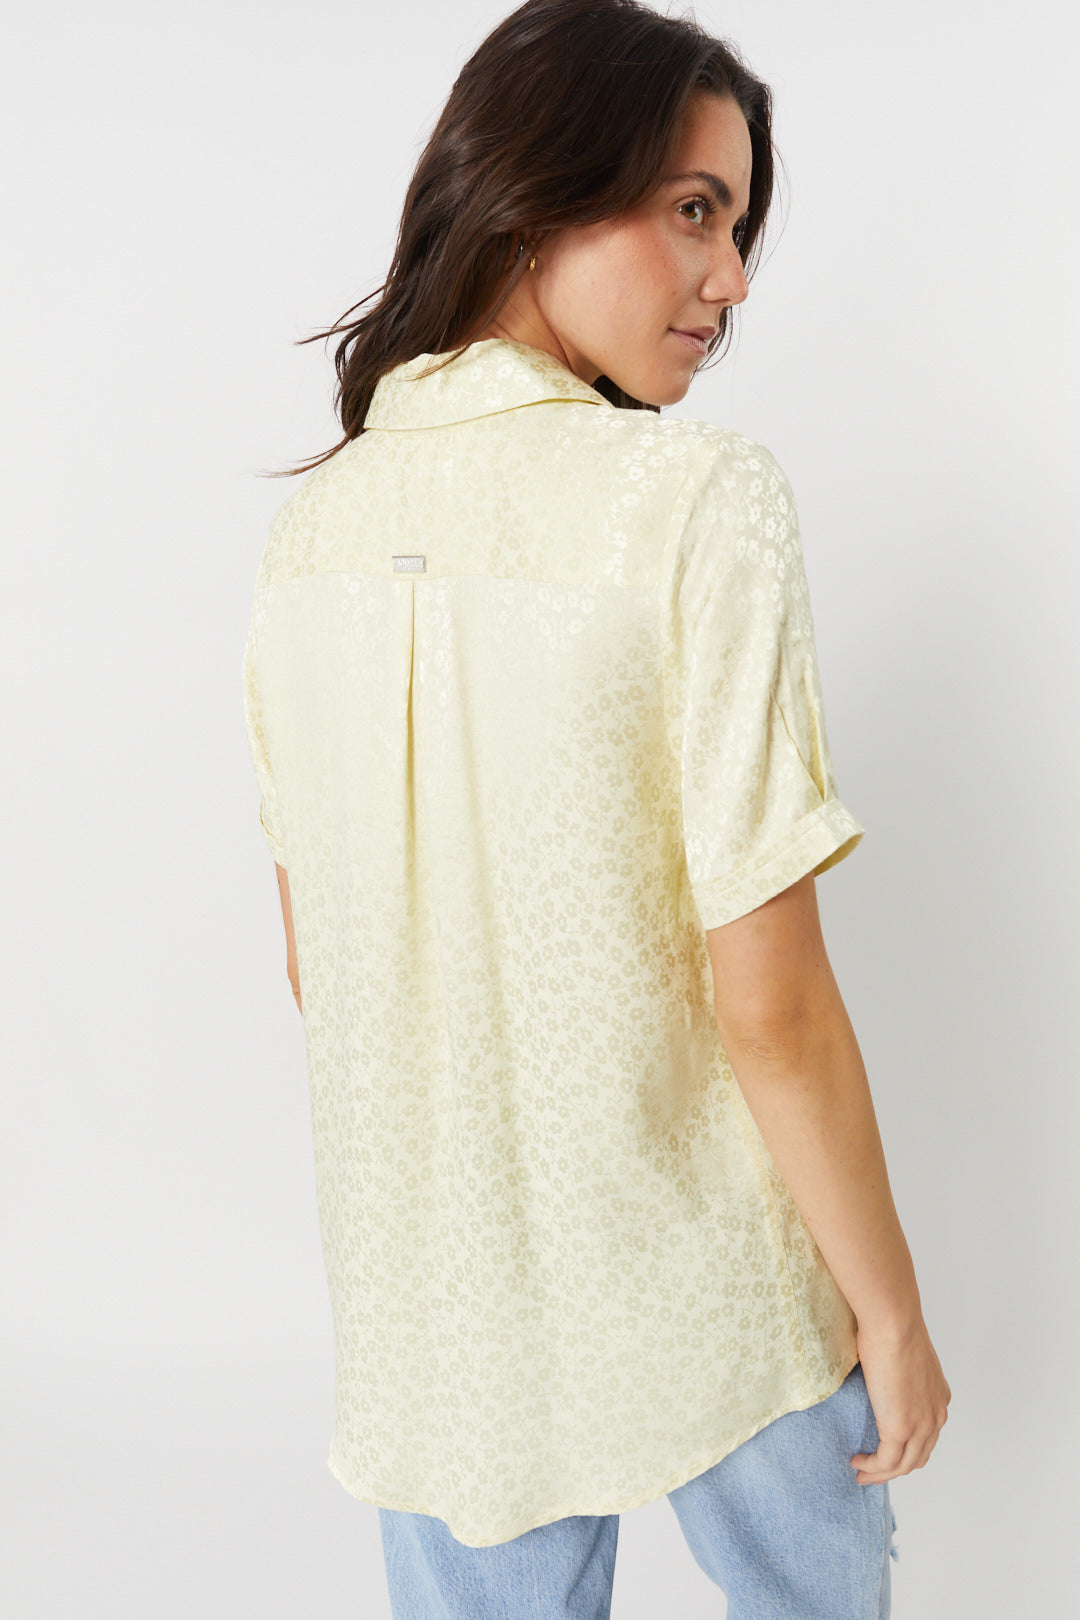 Yellow floral shirt | Bridget